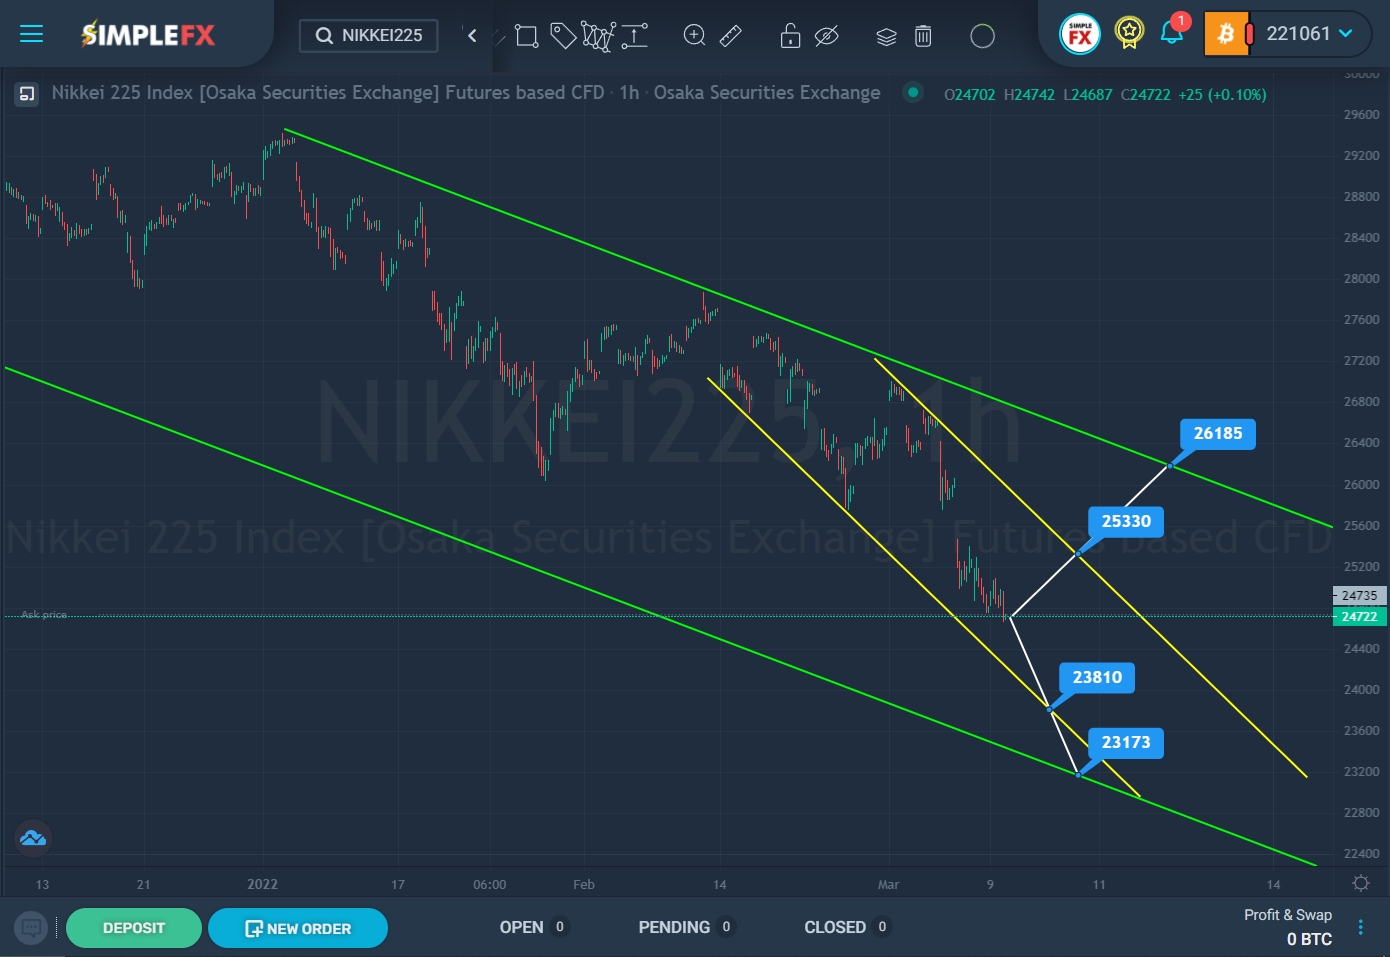 SimpleFX NIKKEI225 Chart Analysis: March 9, 2022